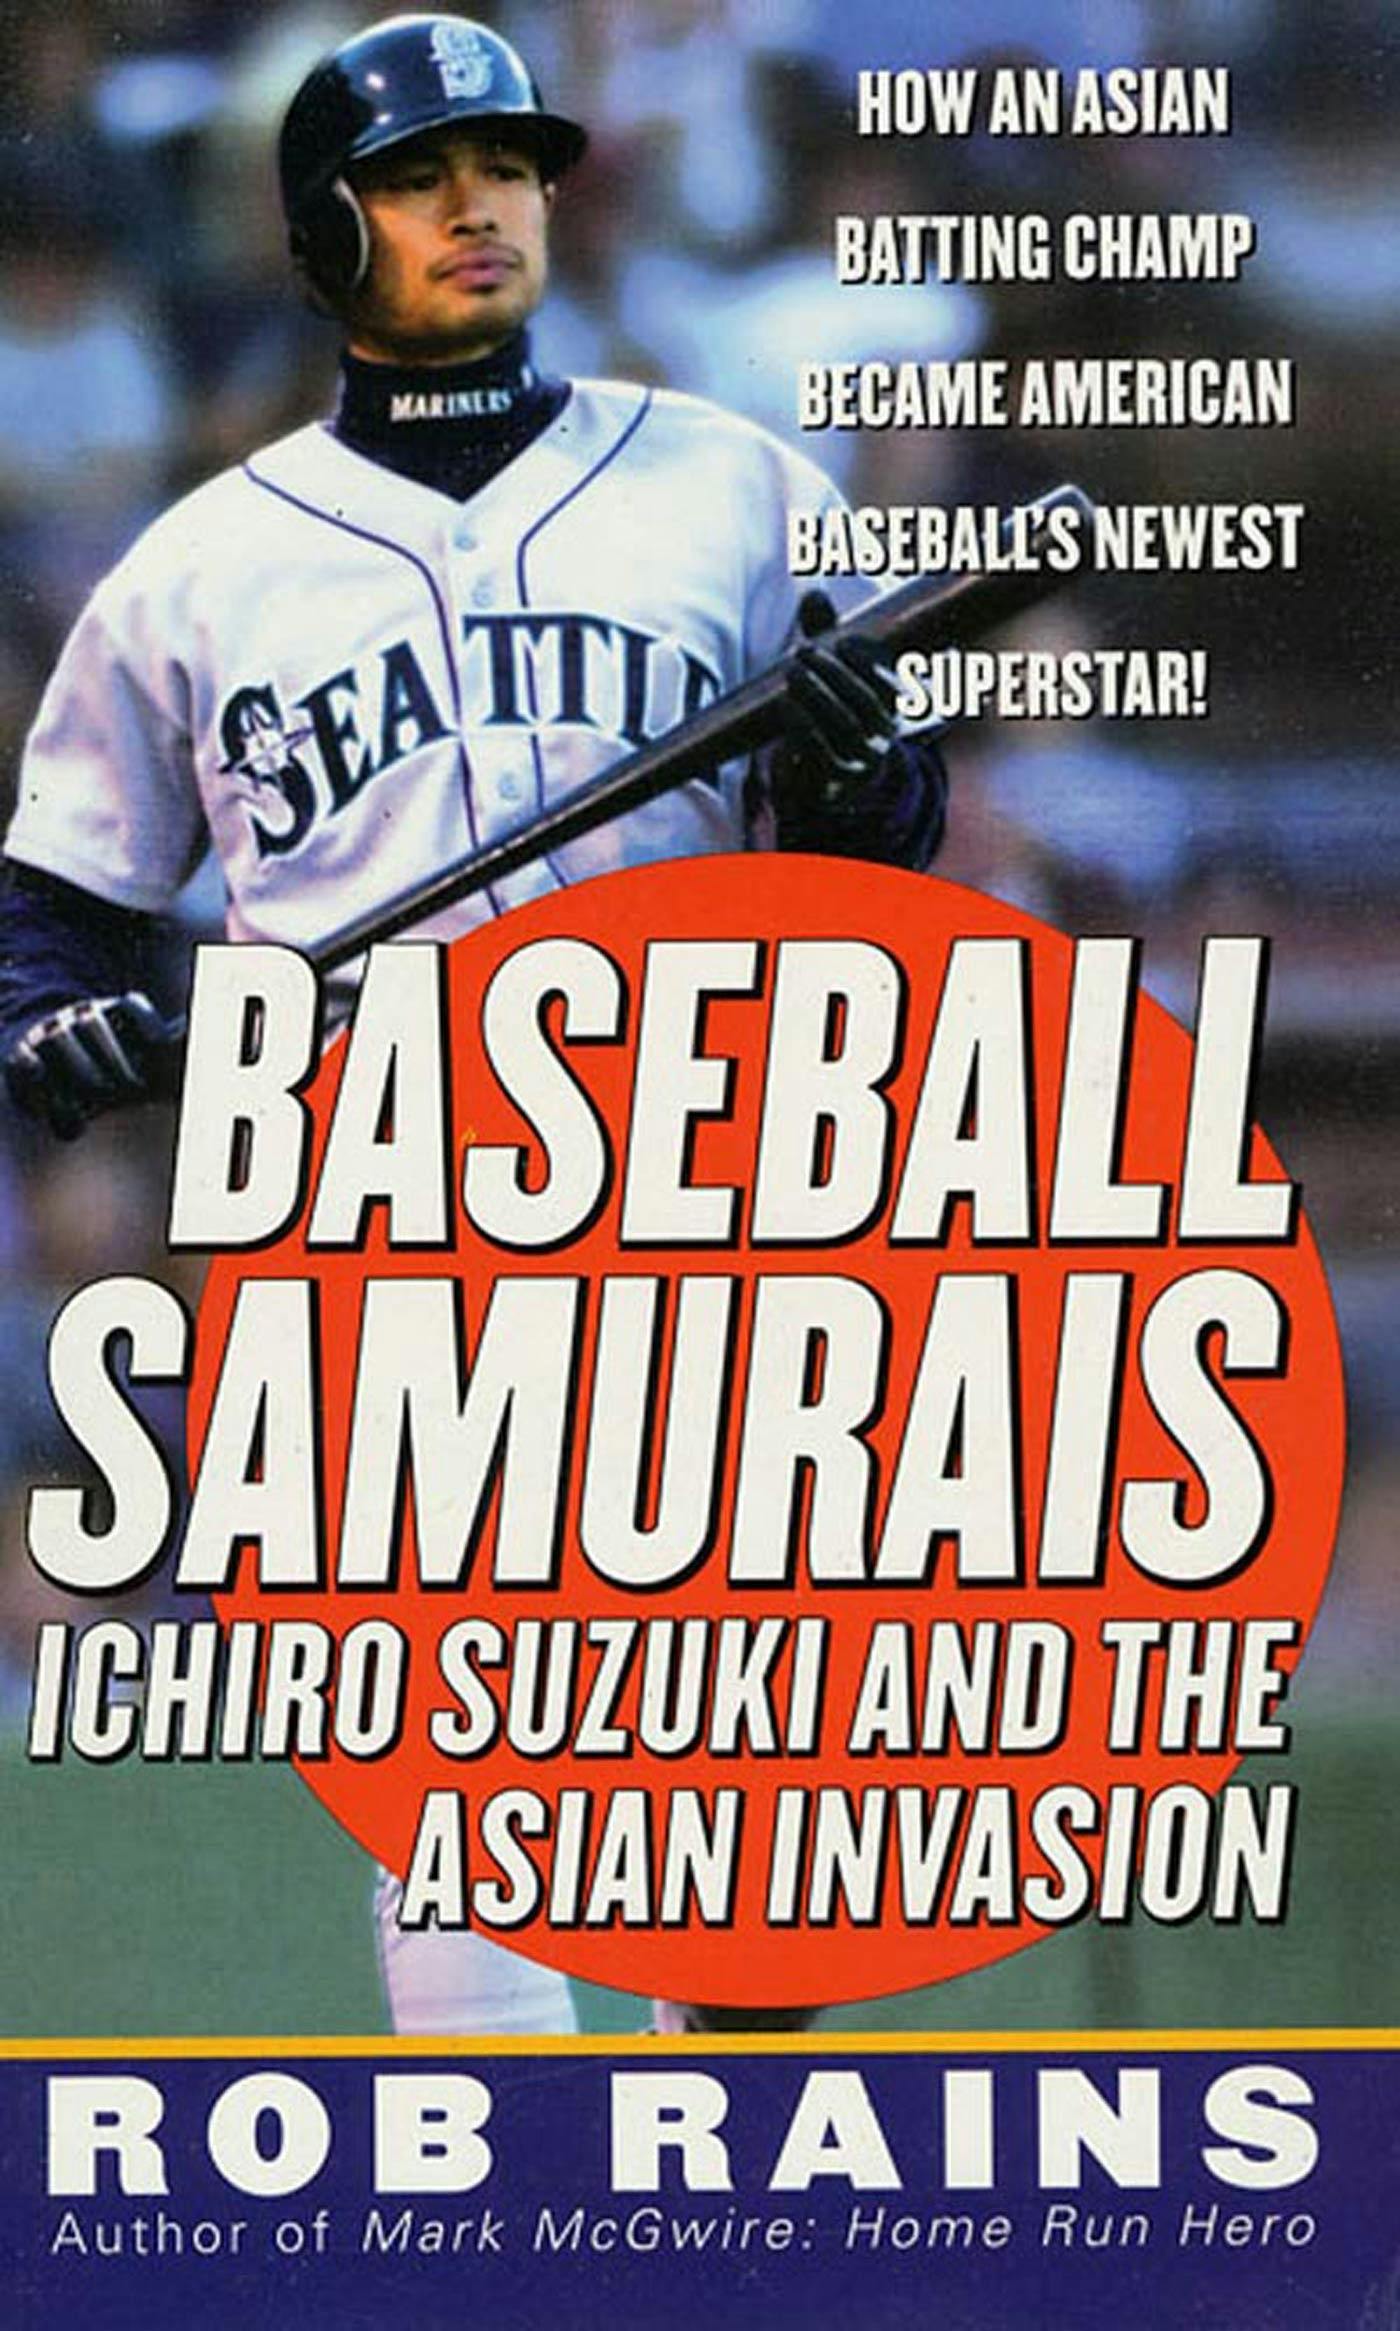 Mariners History: Ichiro Suzuki First Position Player Signed from Japan